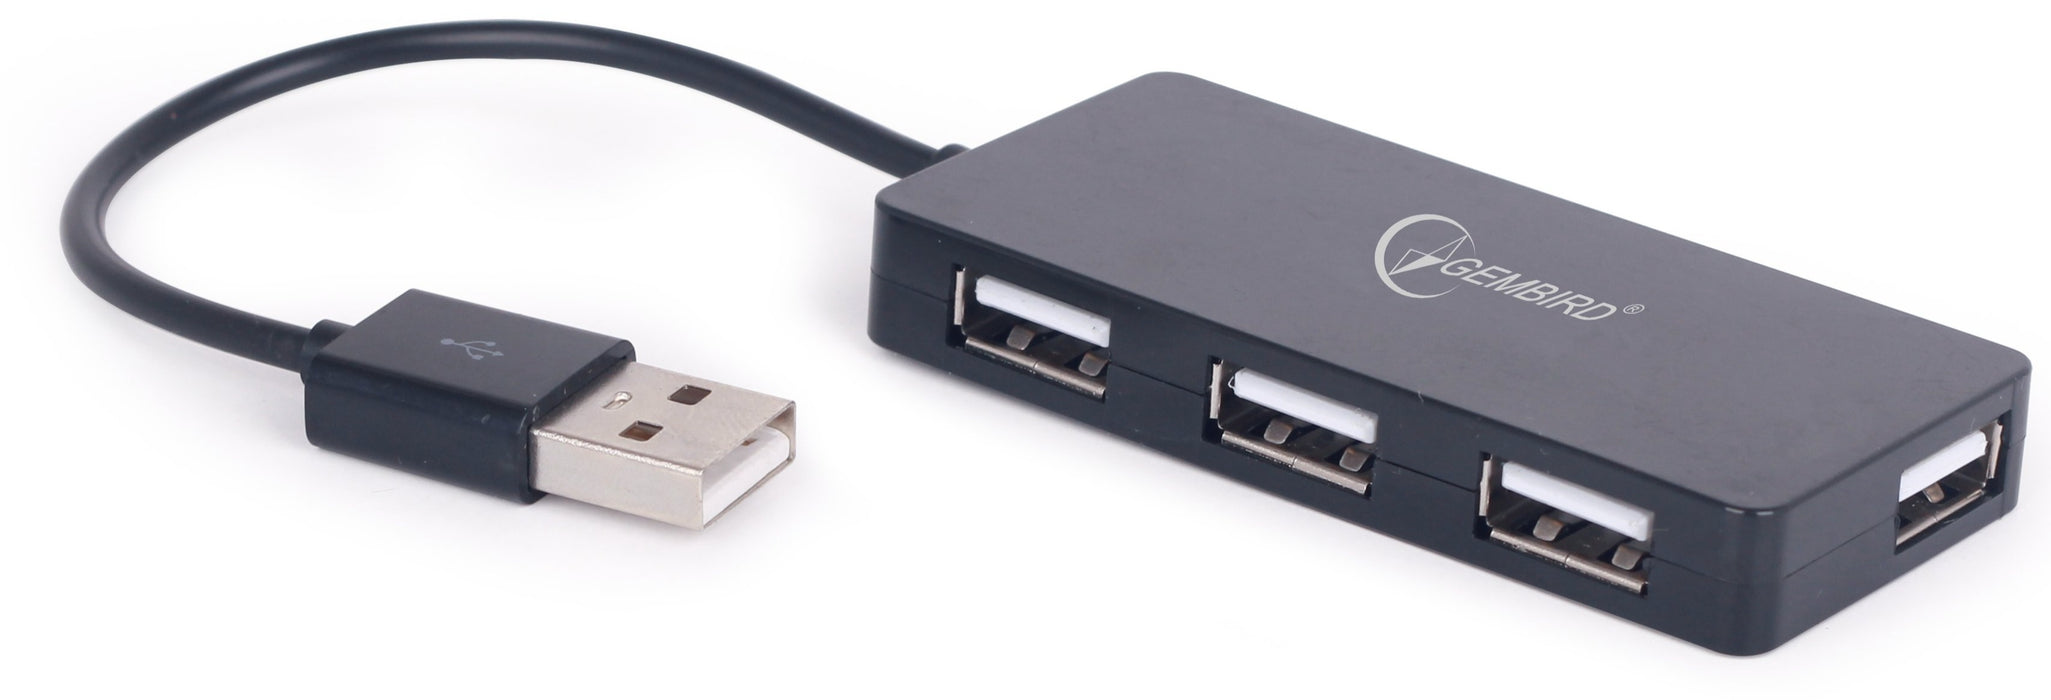 Gembird 4-Port 2.0 USB HUB - USB-4HUB/NP